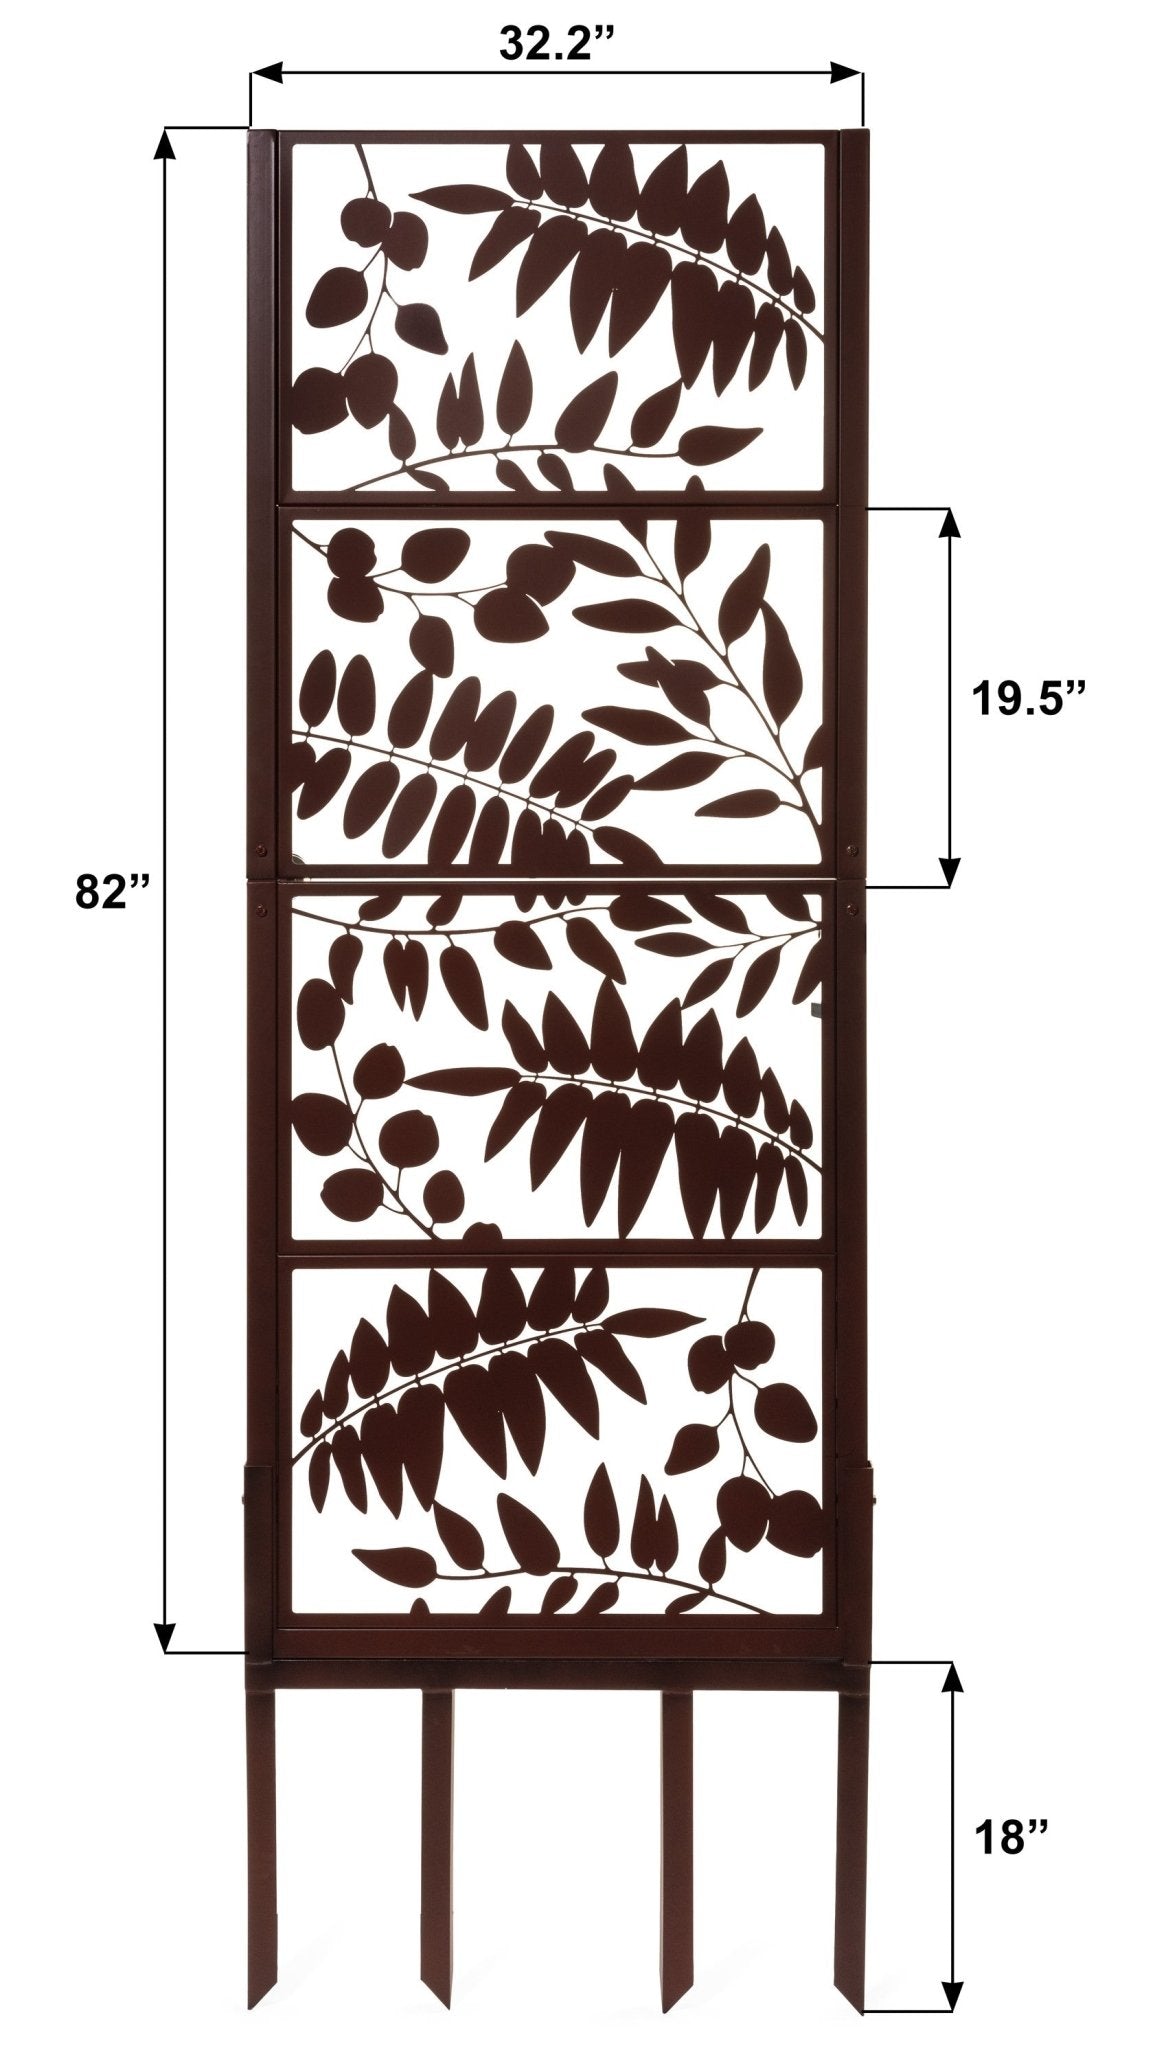 H Potter Garden Trellis Privacy Screen: Climbing Plants, Outdoor Patio, Decorative Metal Panel